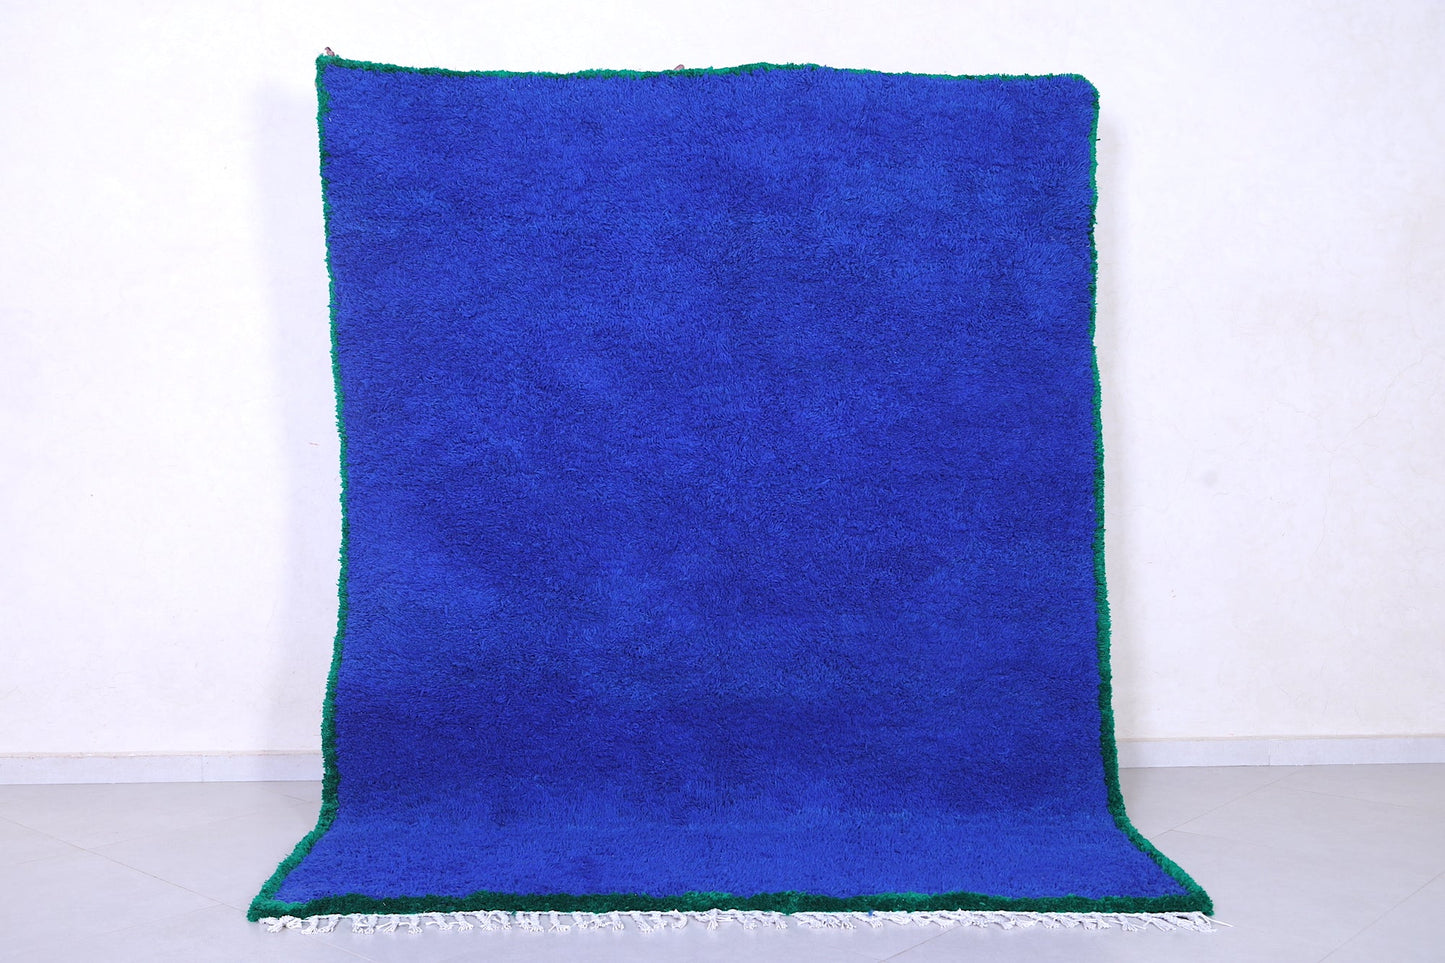 Blue custom rug with green borders - Handmade Moroccan solid rug